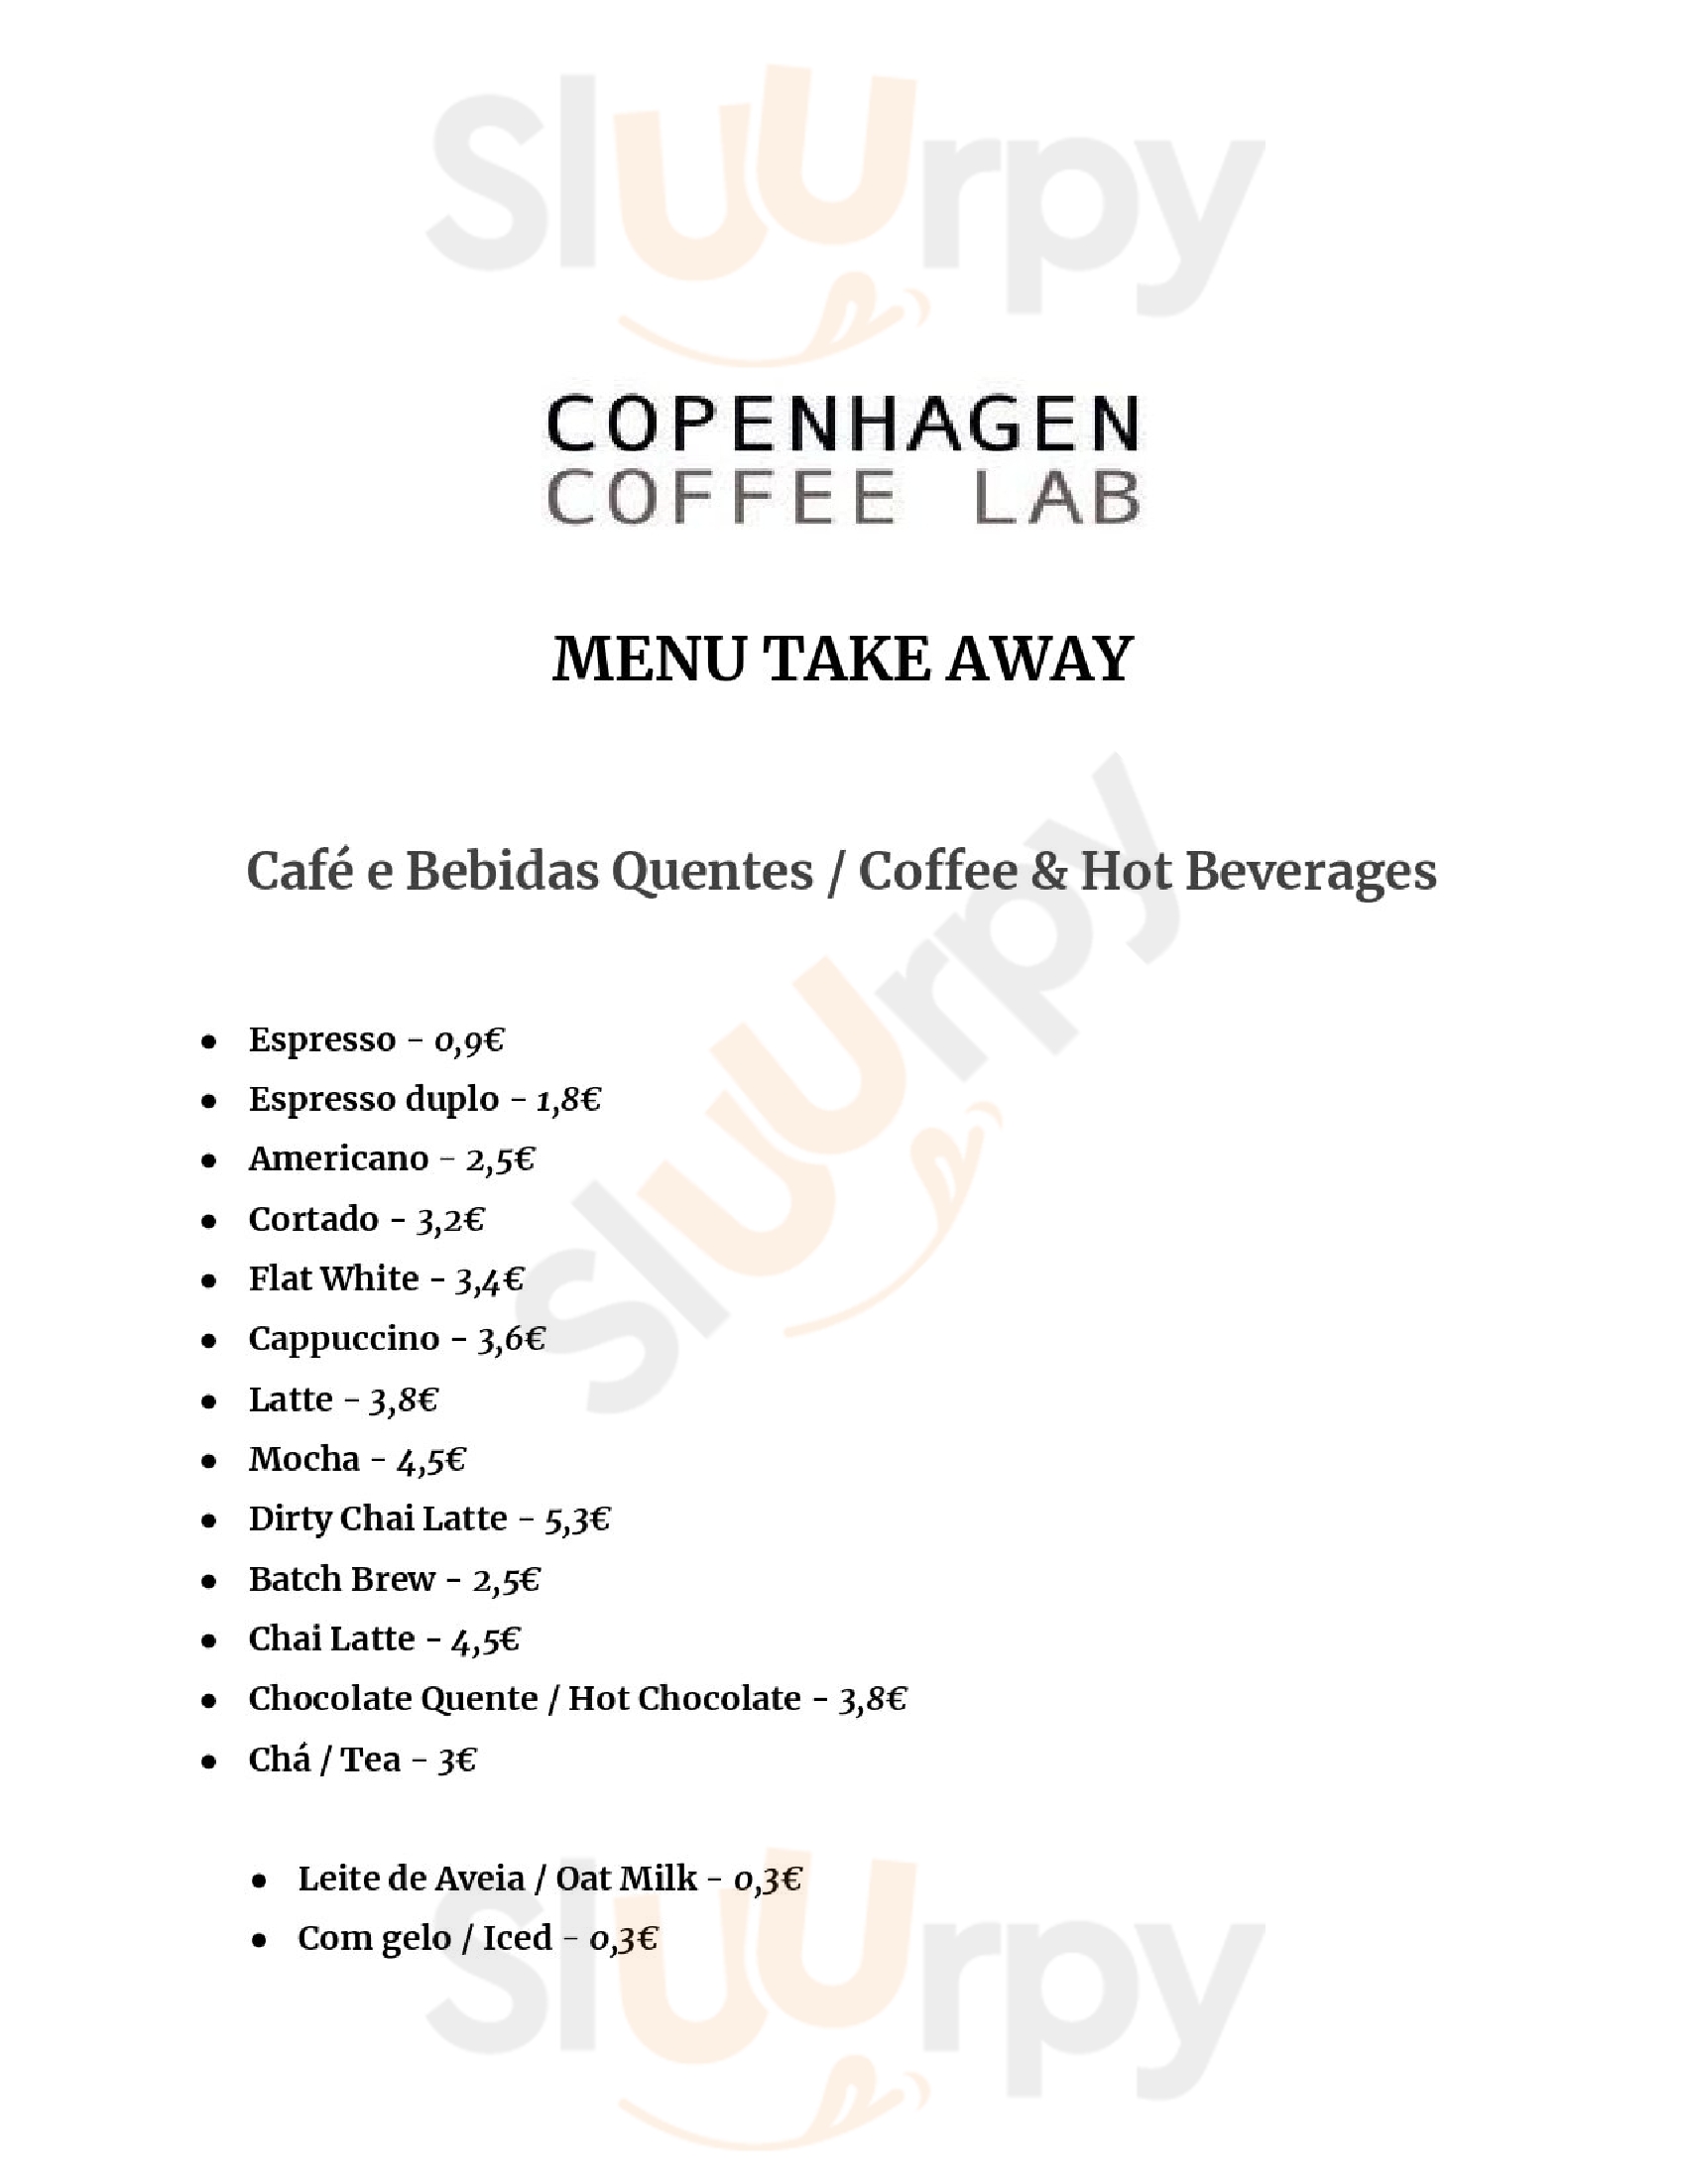 Copenhagen Coffee Lab Lisboa Menu - 1